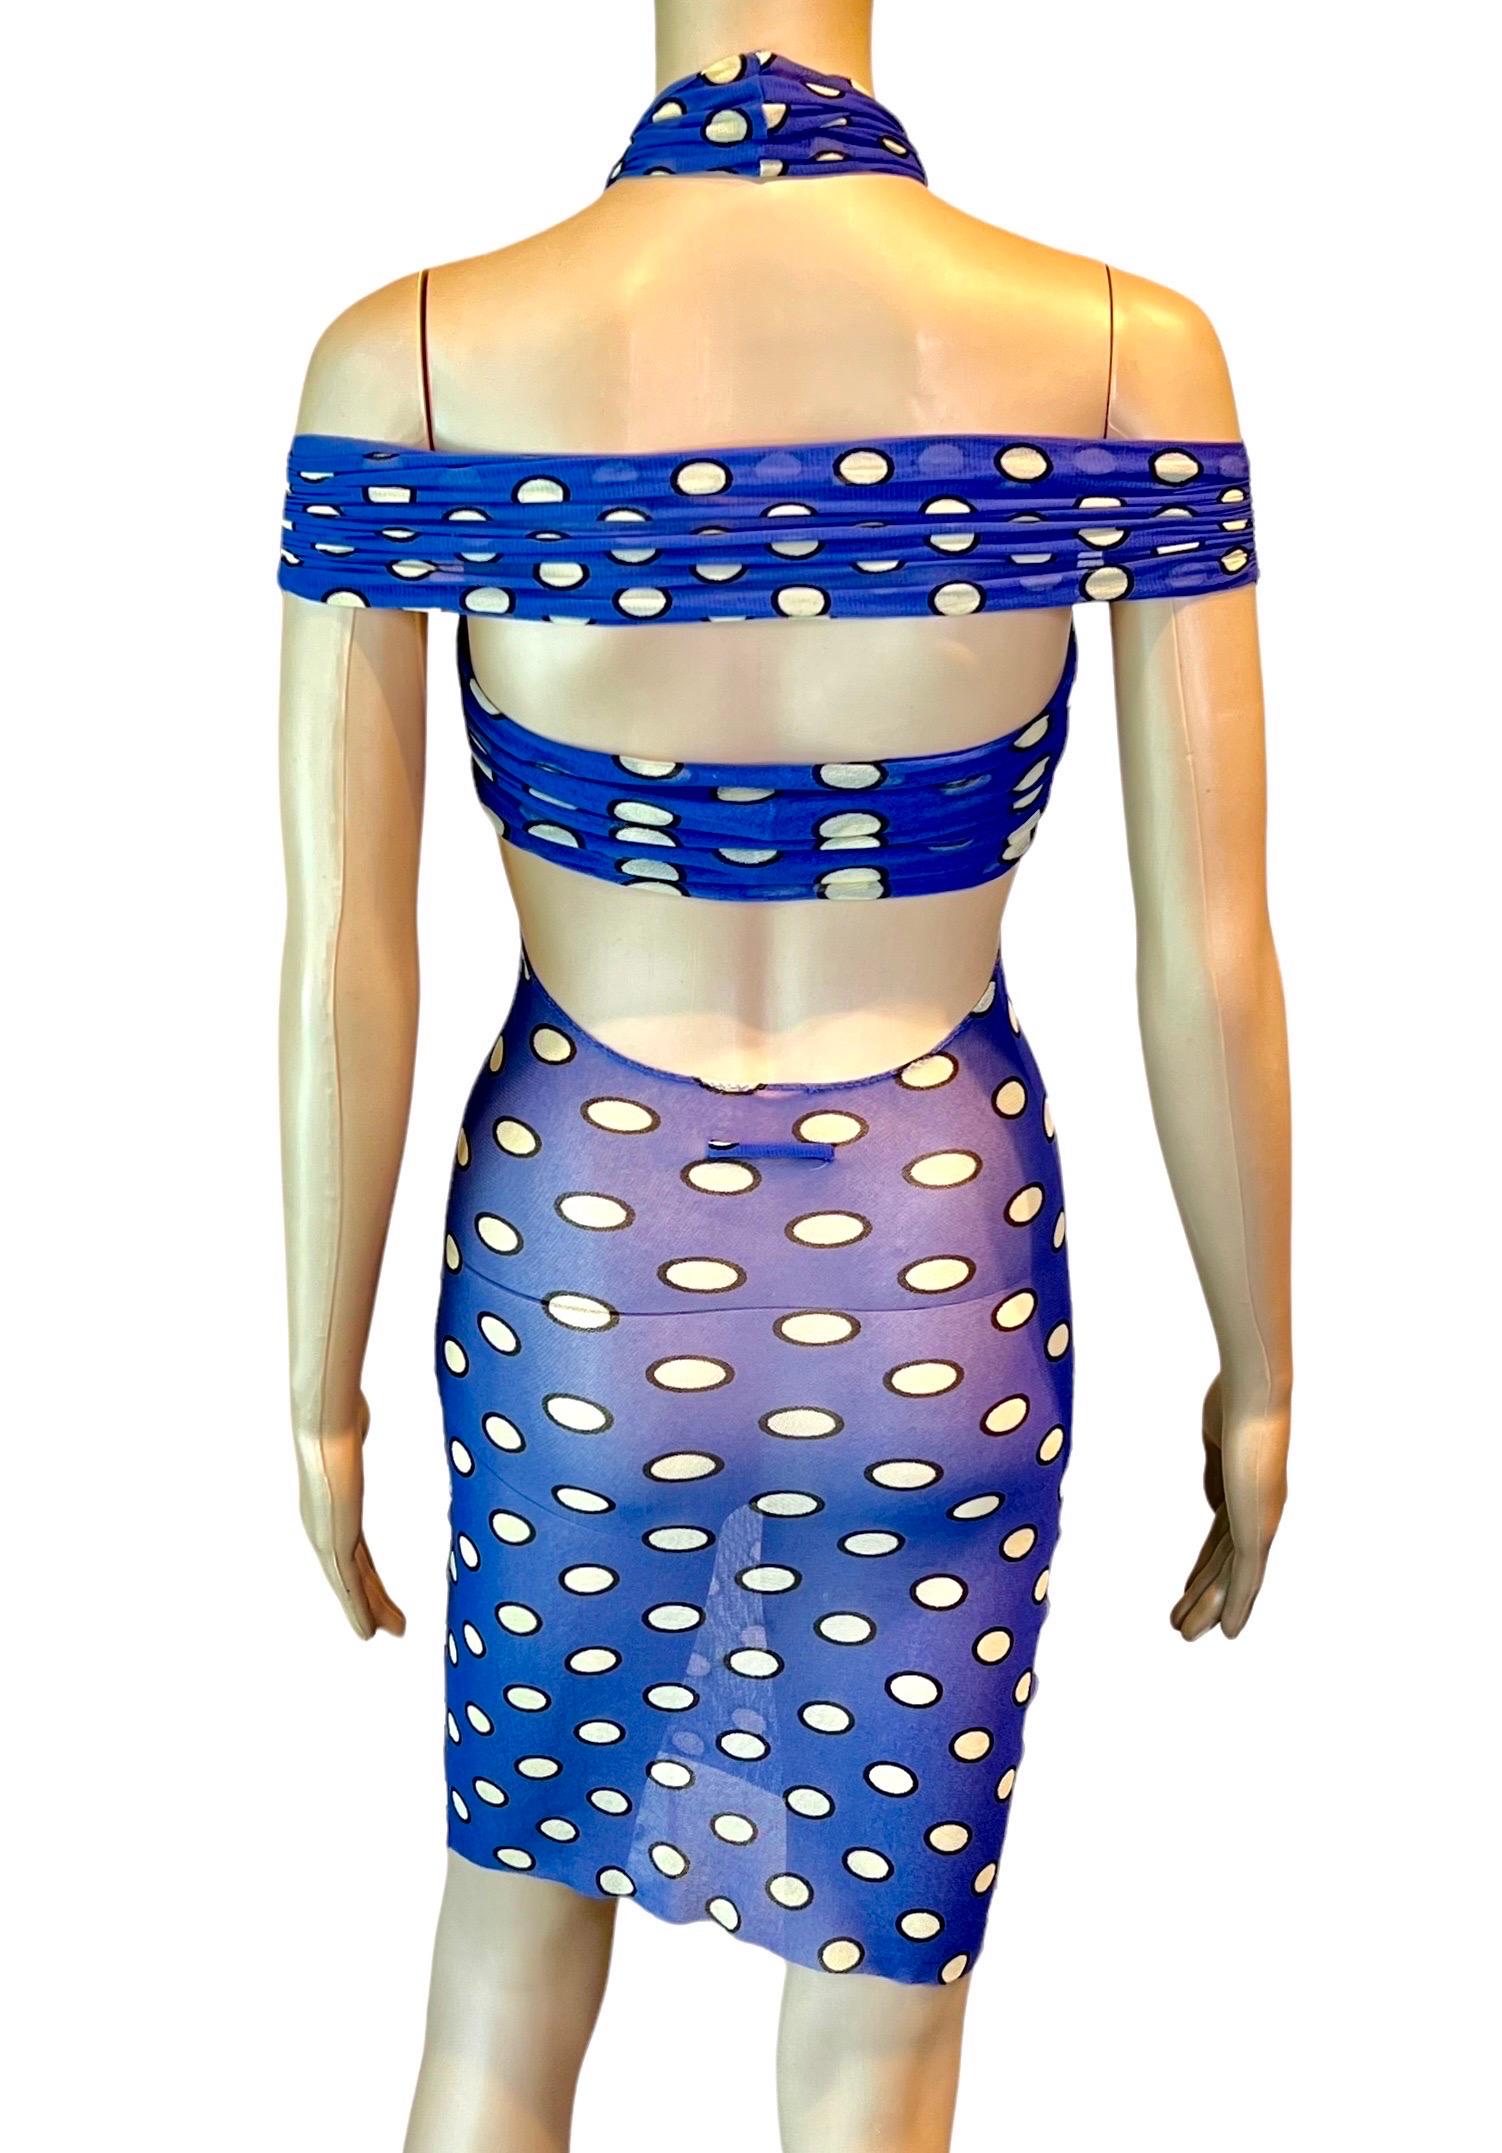 Jean Paul Gaultier Soleil S/S 1999 Cutout Polka Dot Mesh Bodycon Mini Dress For Sale 2